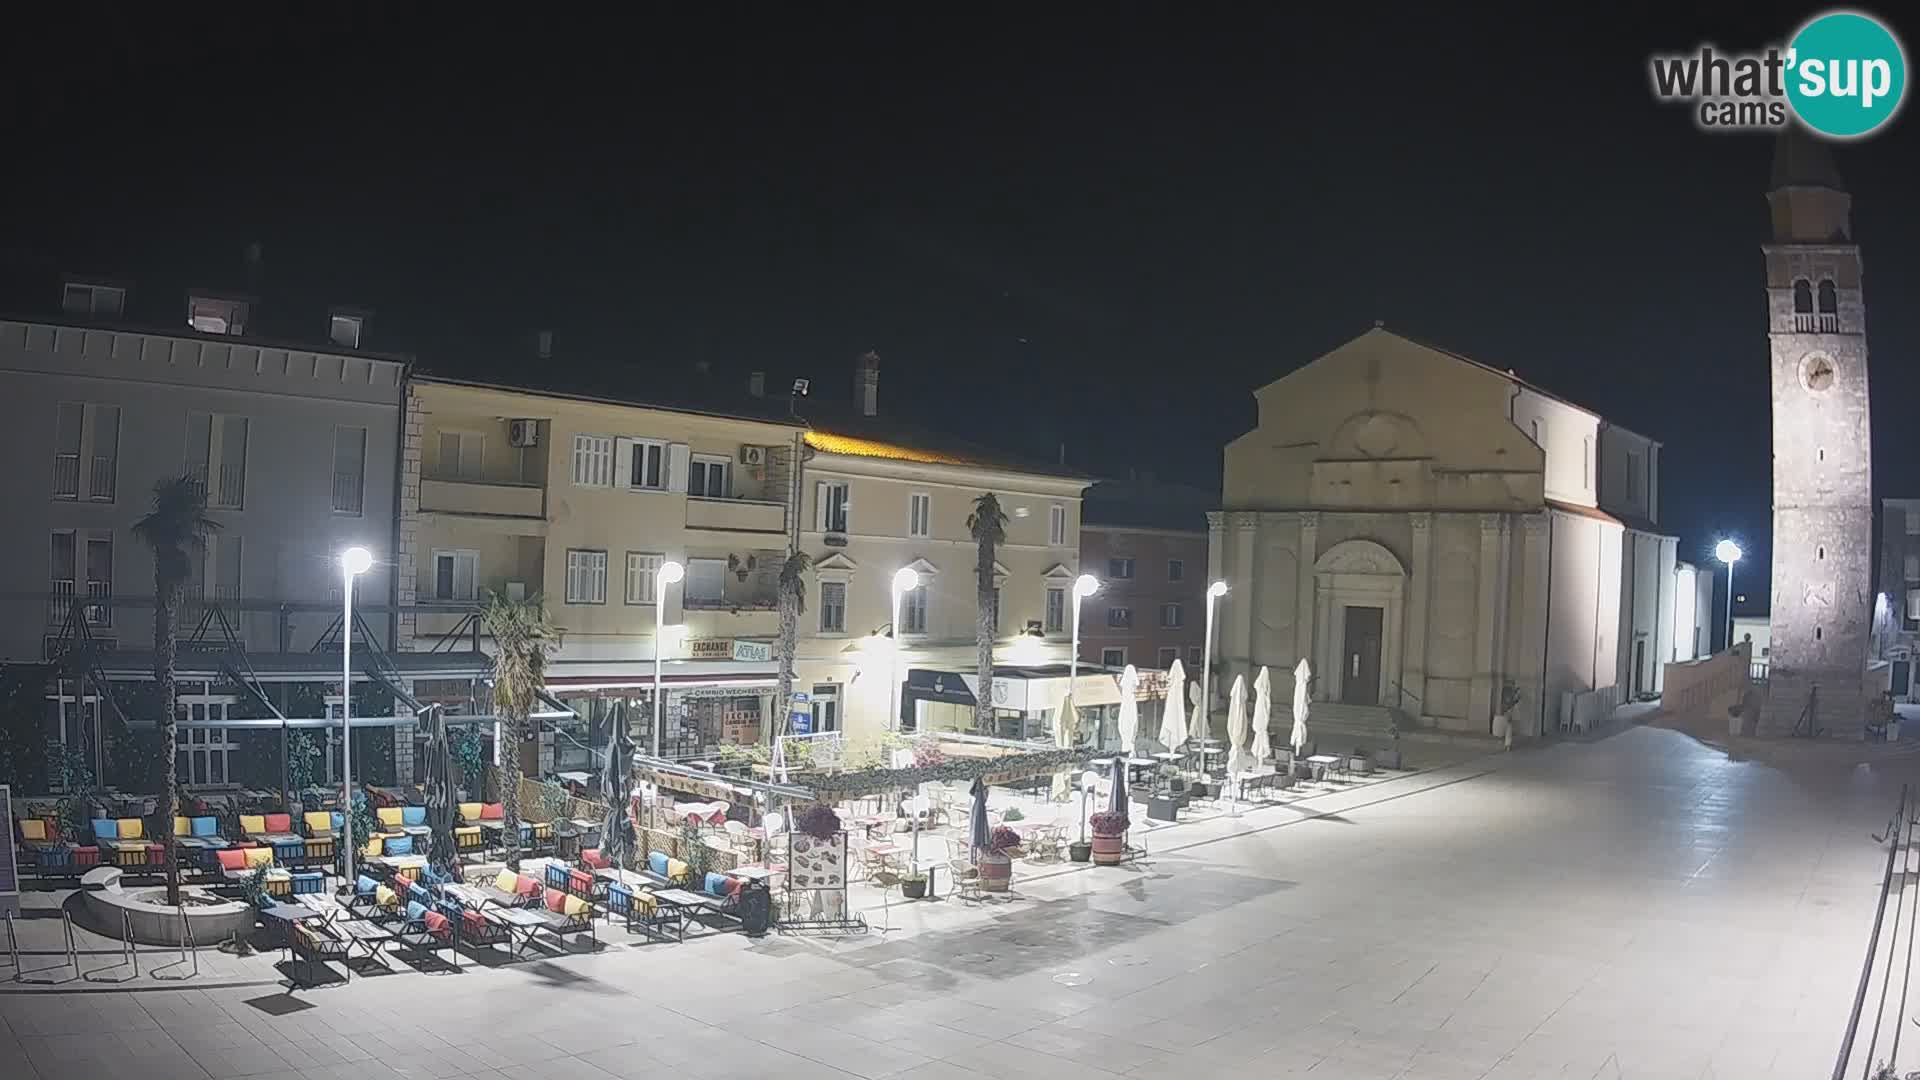 Webcam – Piazza centrale di Umago